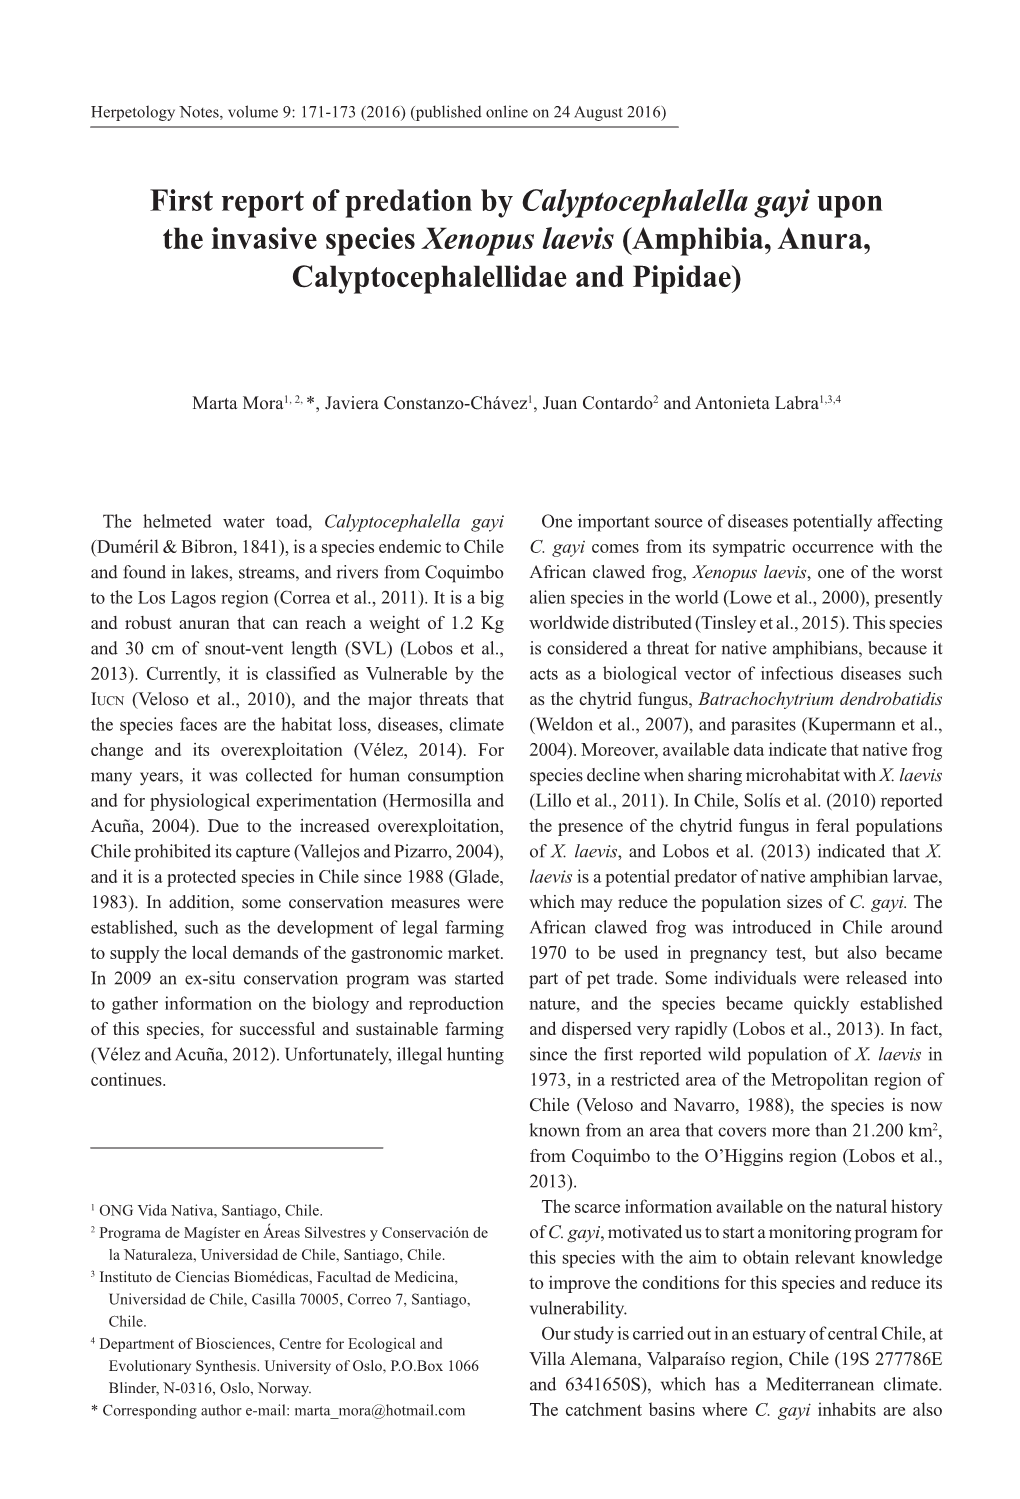 First Report of Predation by Calyptocephalella Gayi Upon the Invasive Species Xenopus Laevis (Amphibia, Anura, Calyptocephalellidae and Pipidae)